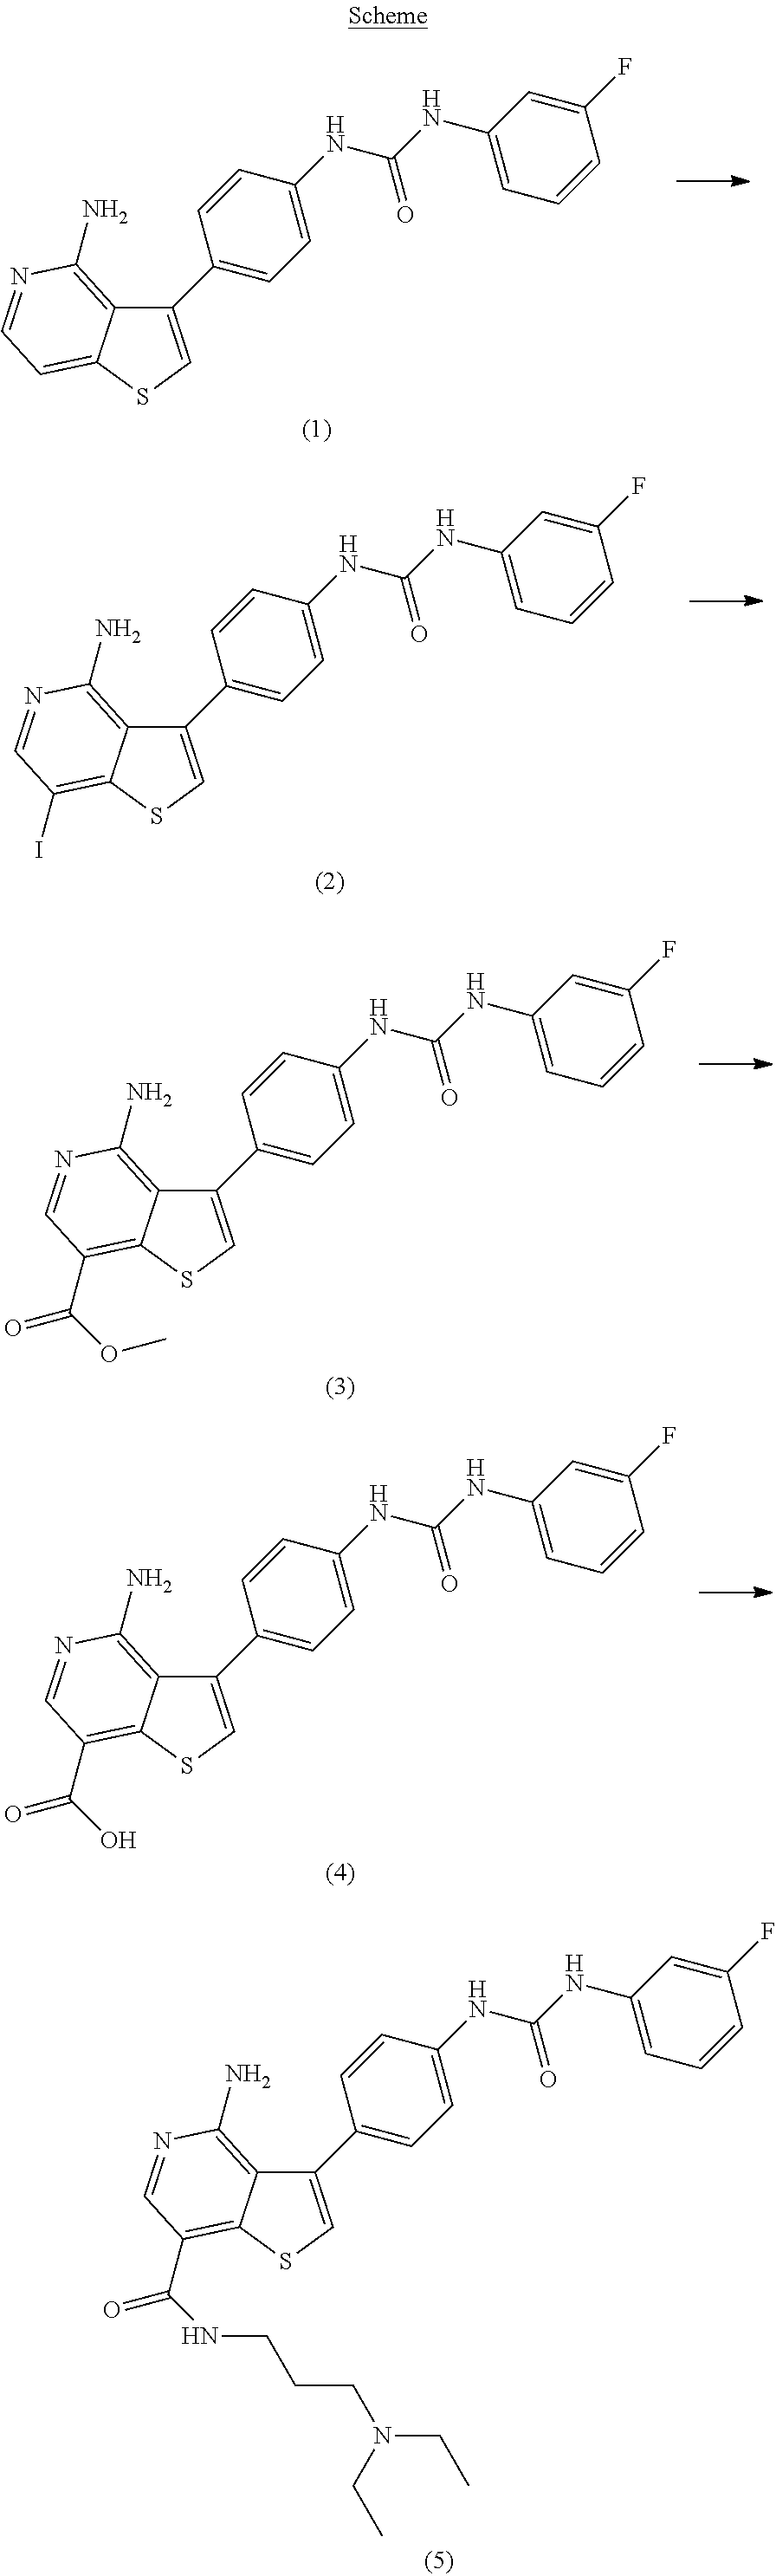 Kinase inhibitor with improved solubility profile